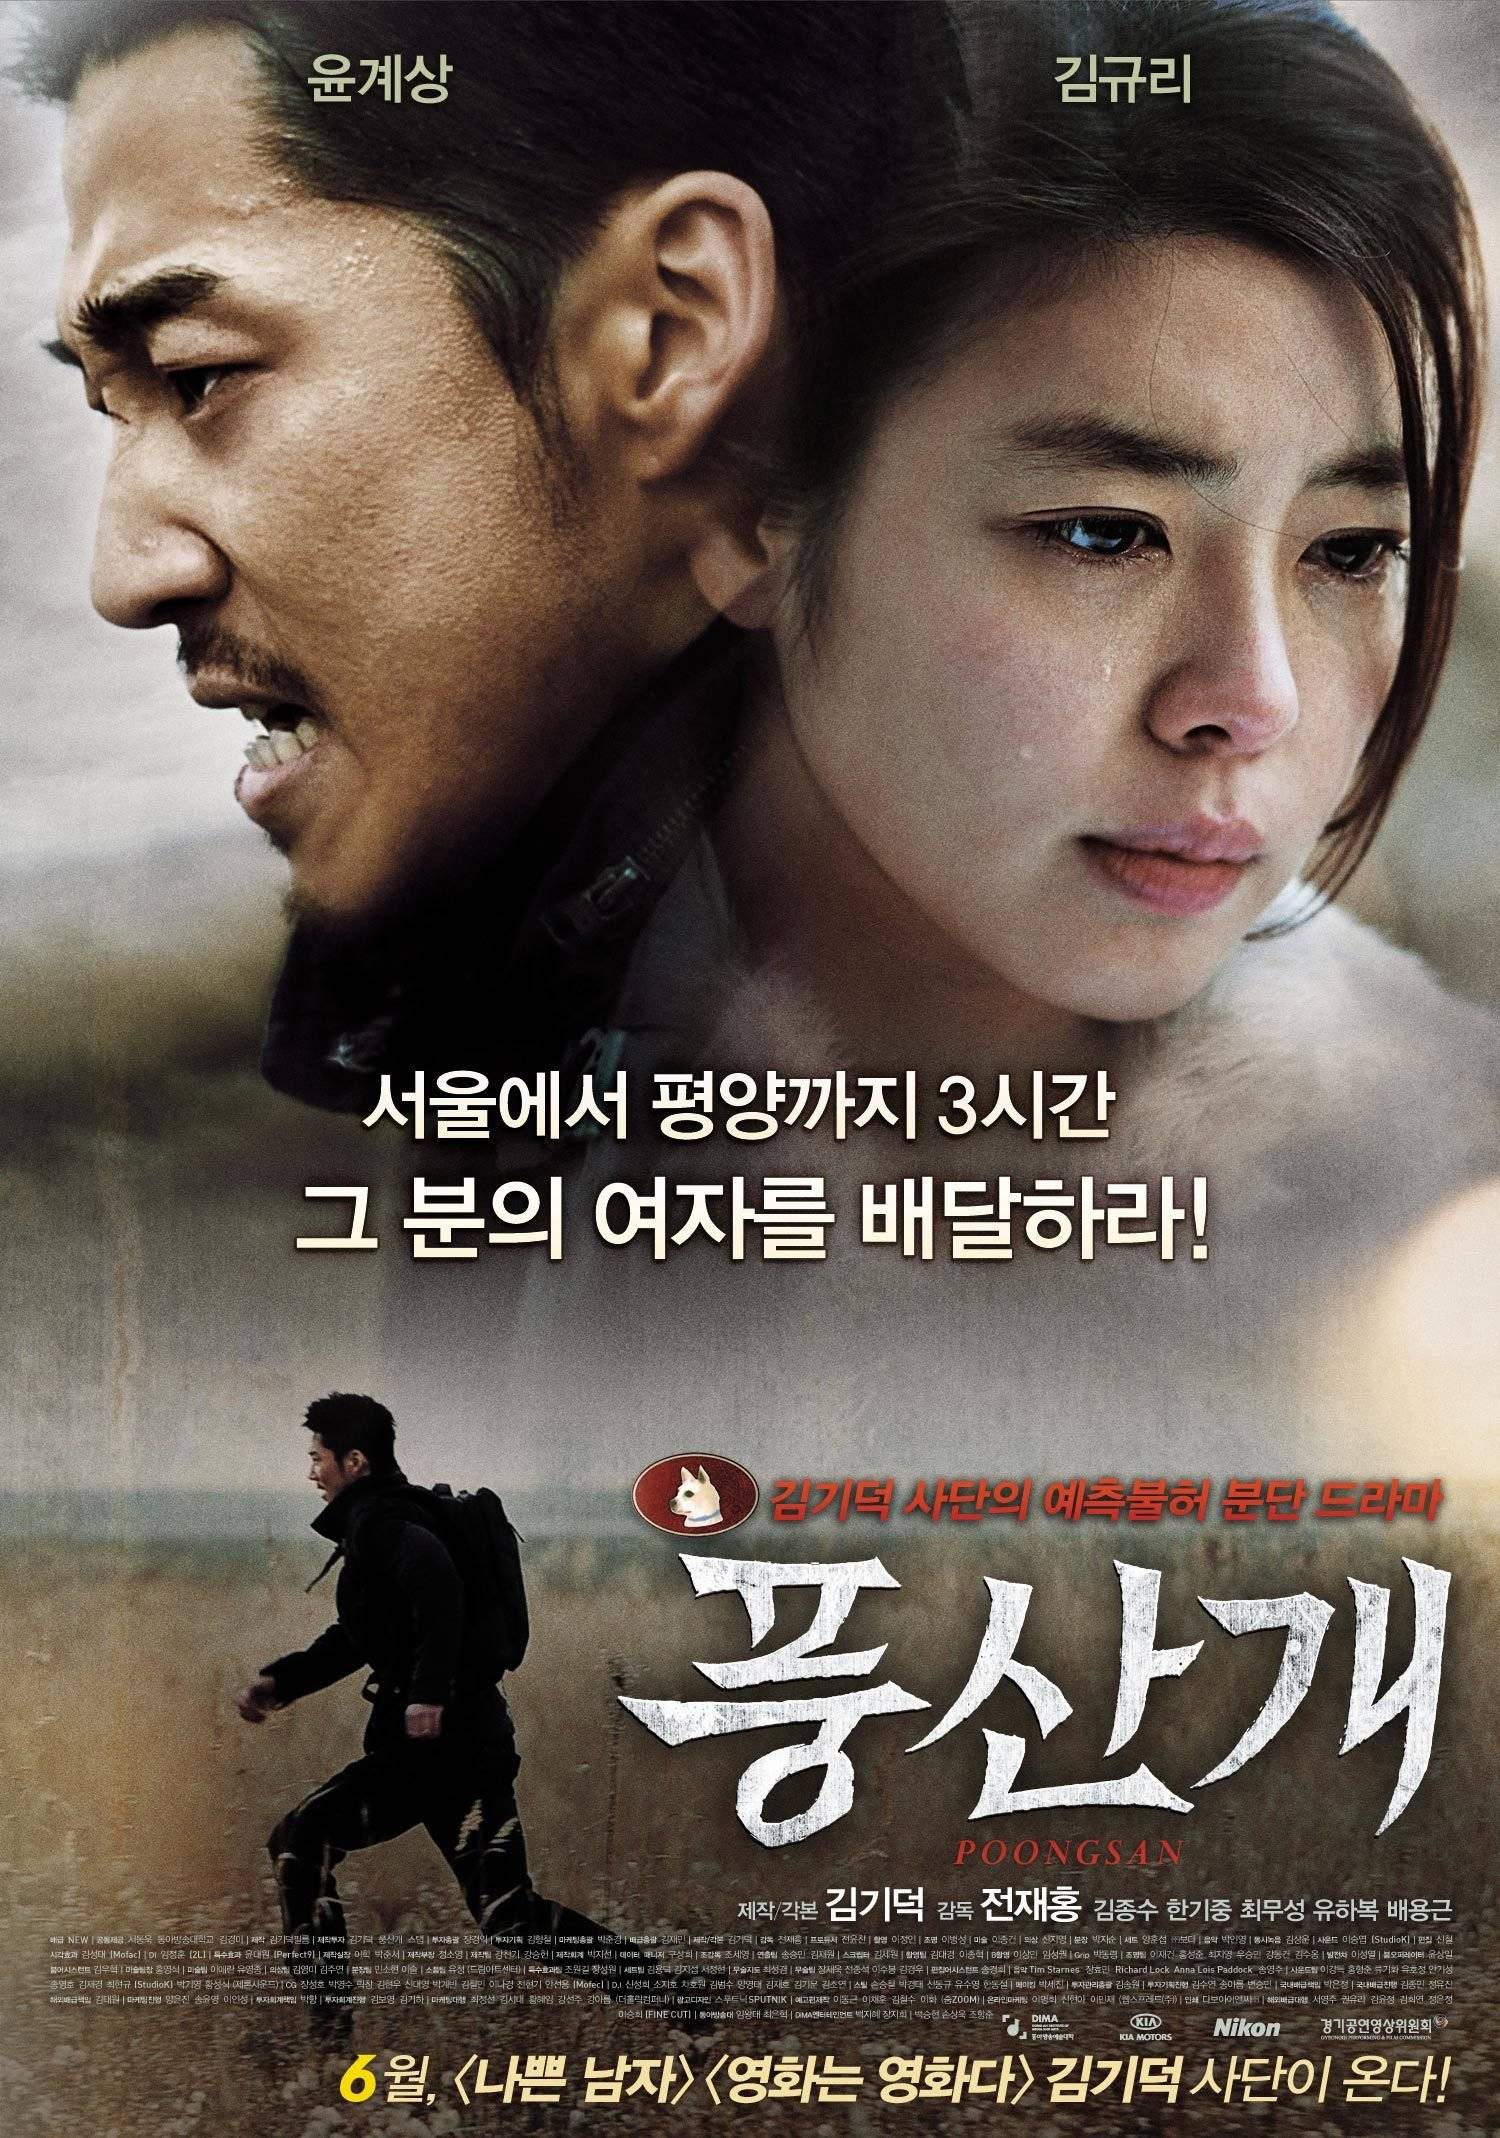  Korean Sad Love Story Movies List Download